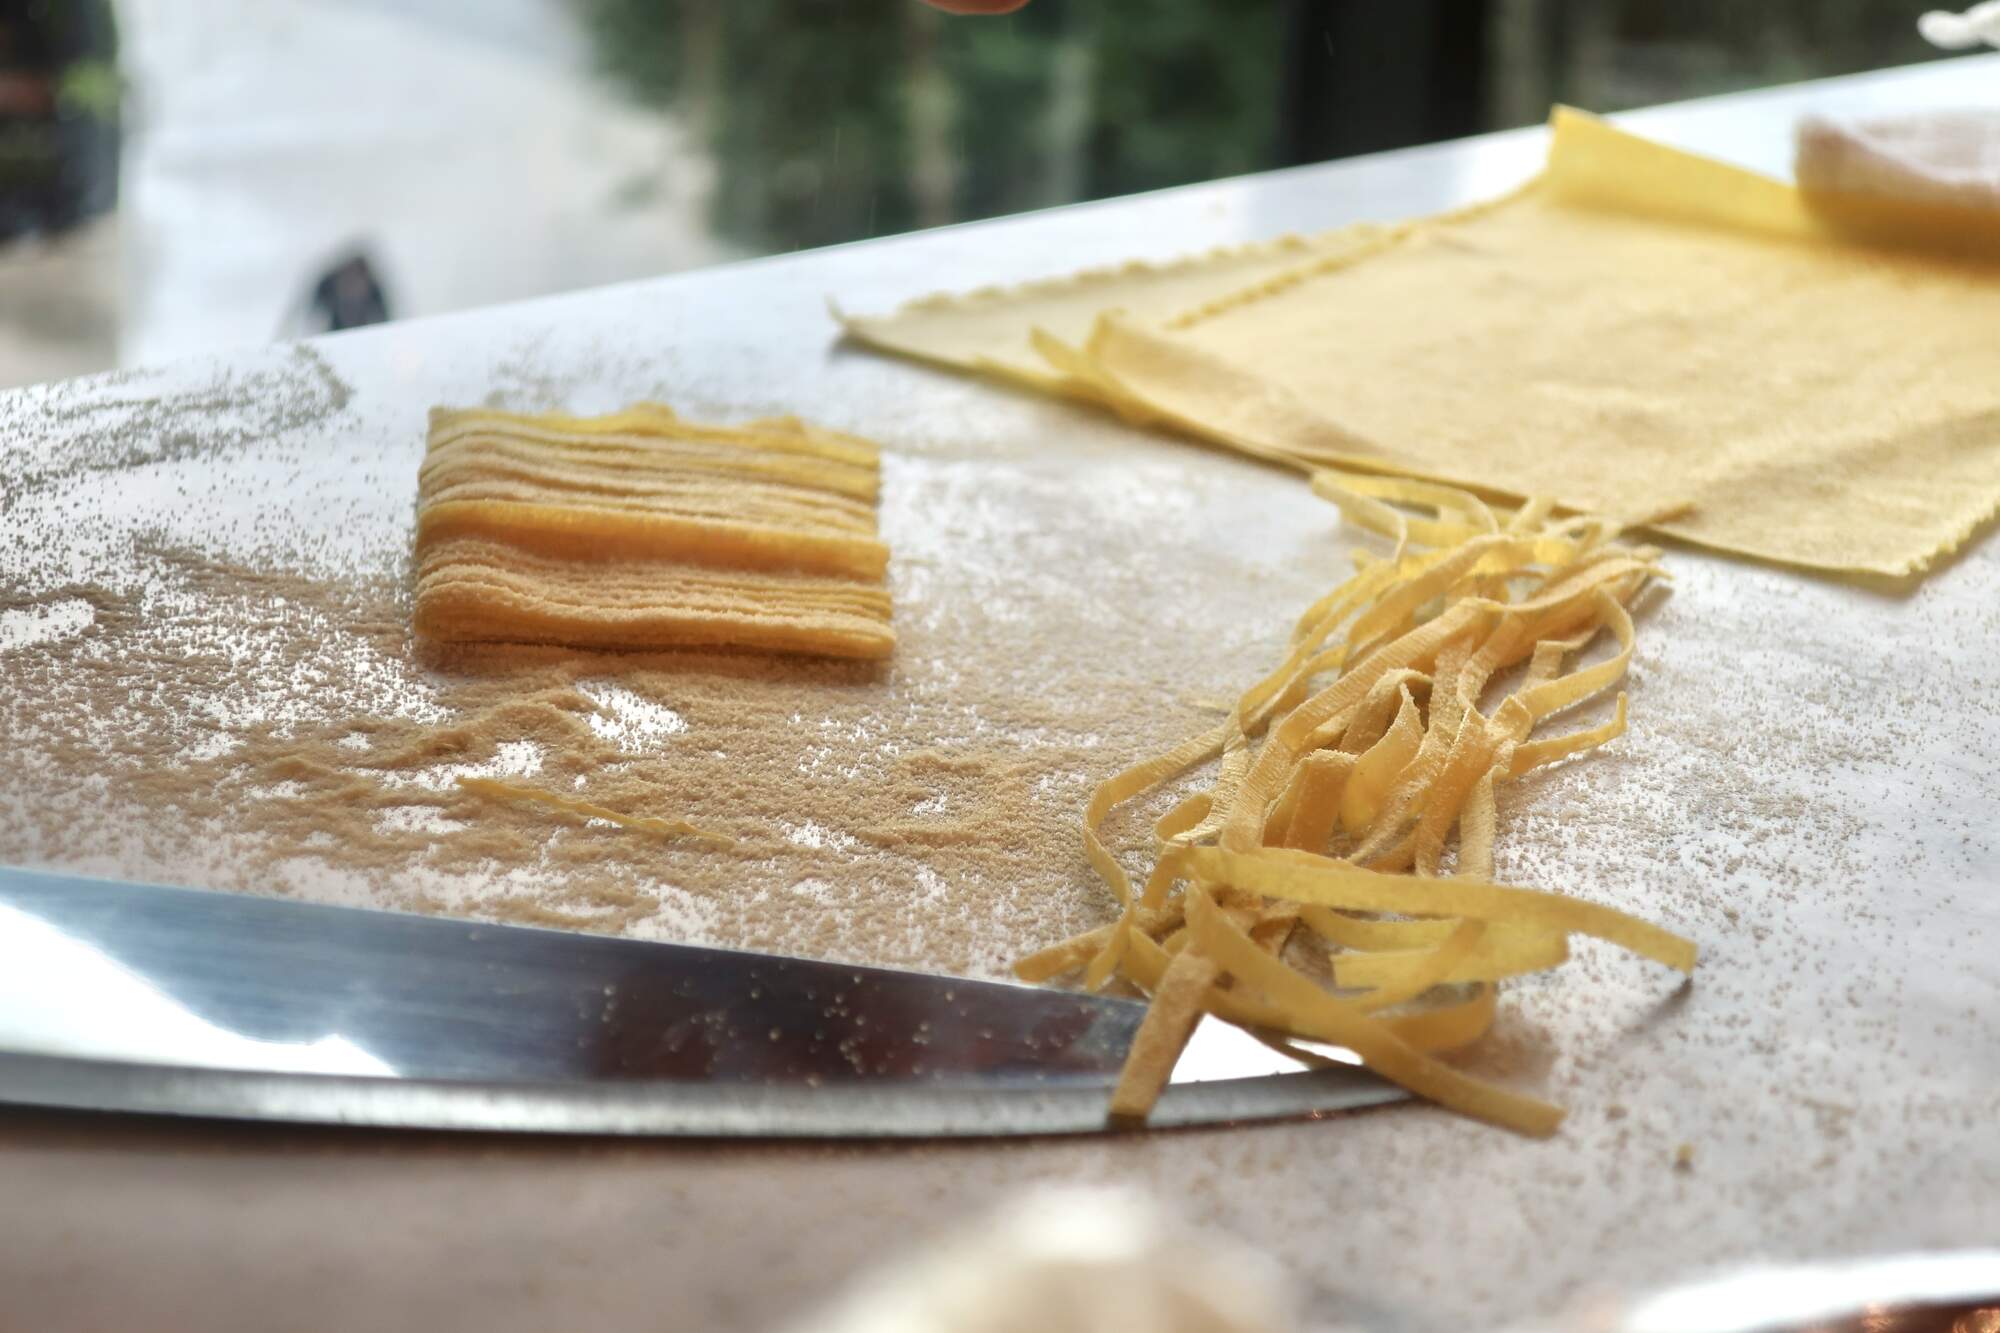 pasta making demonstration